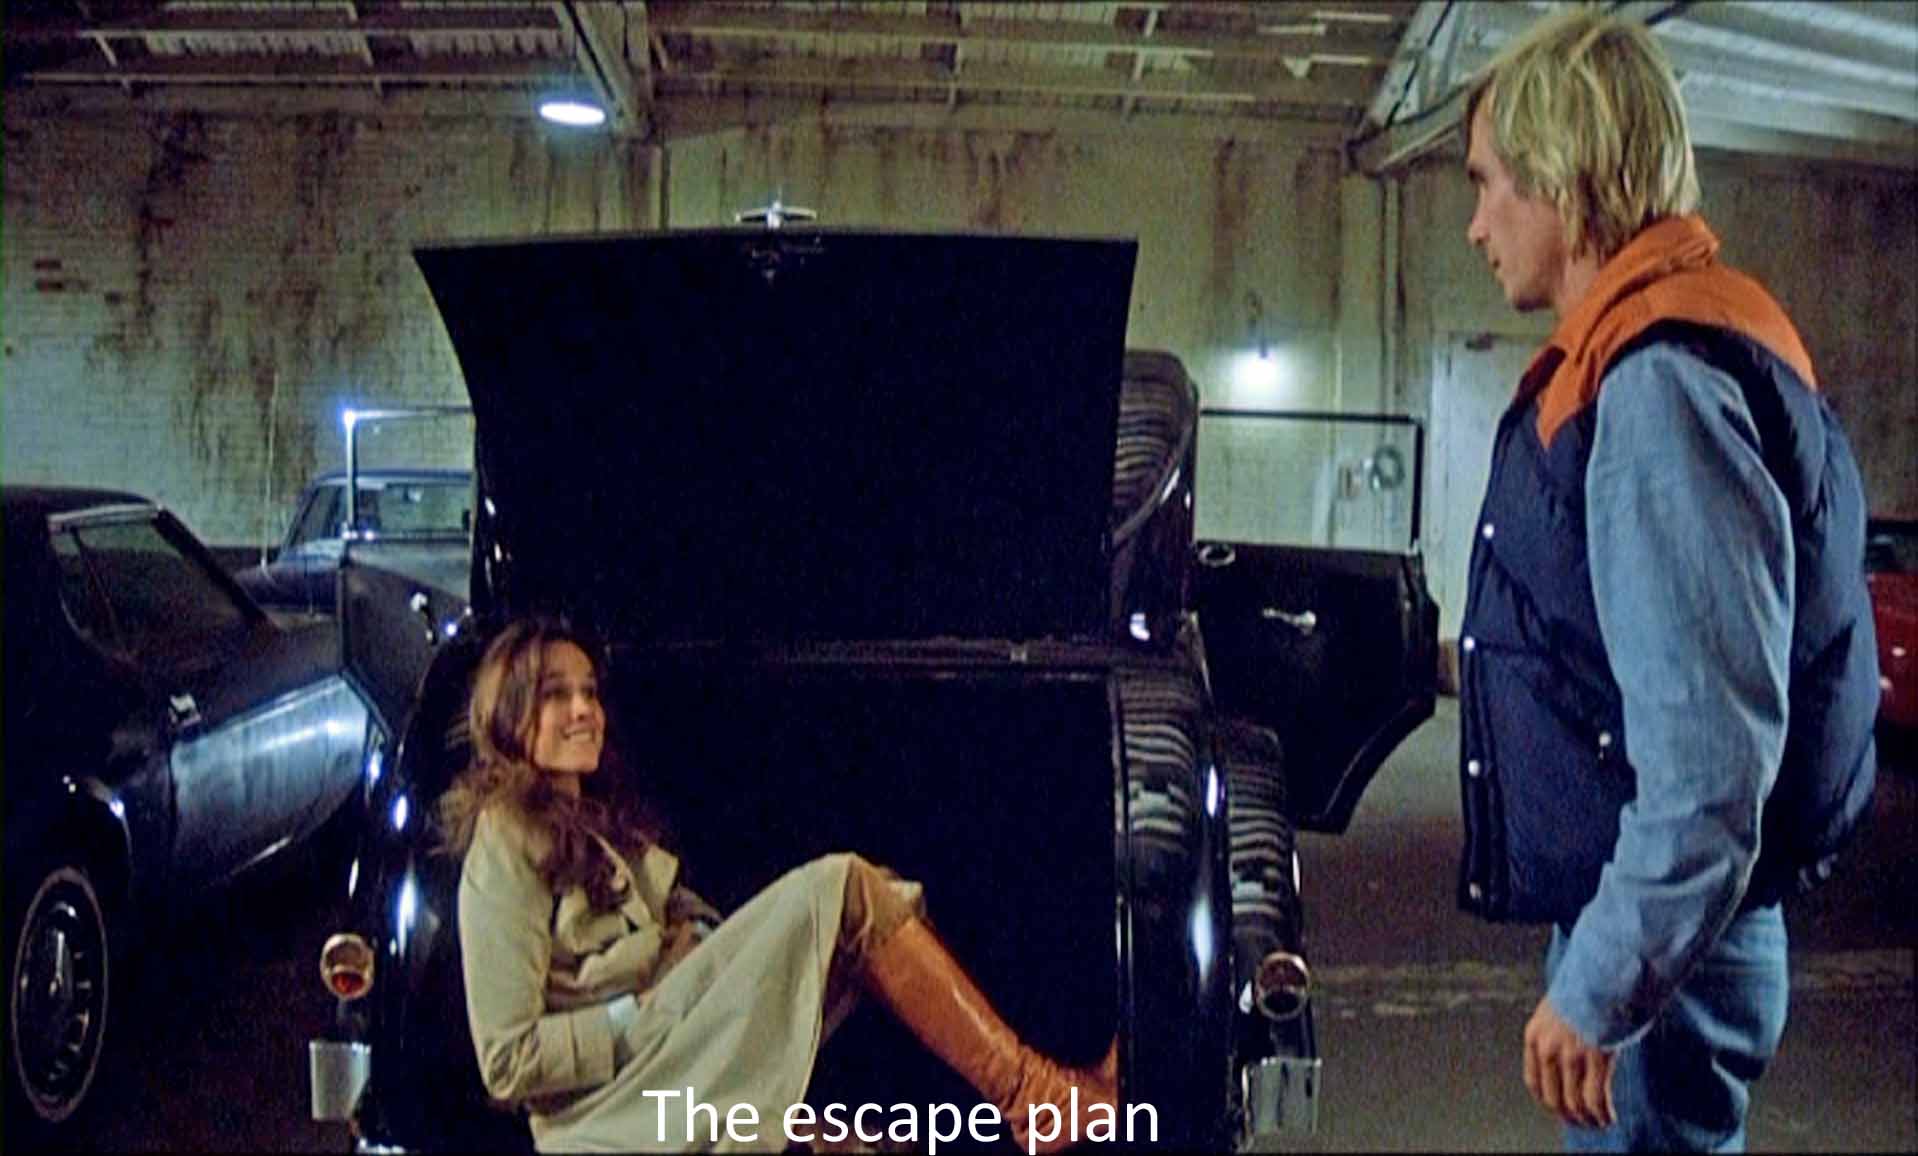 The escape plan